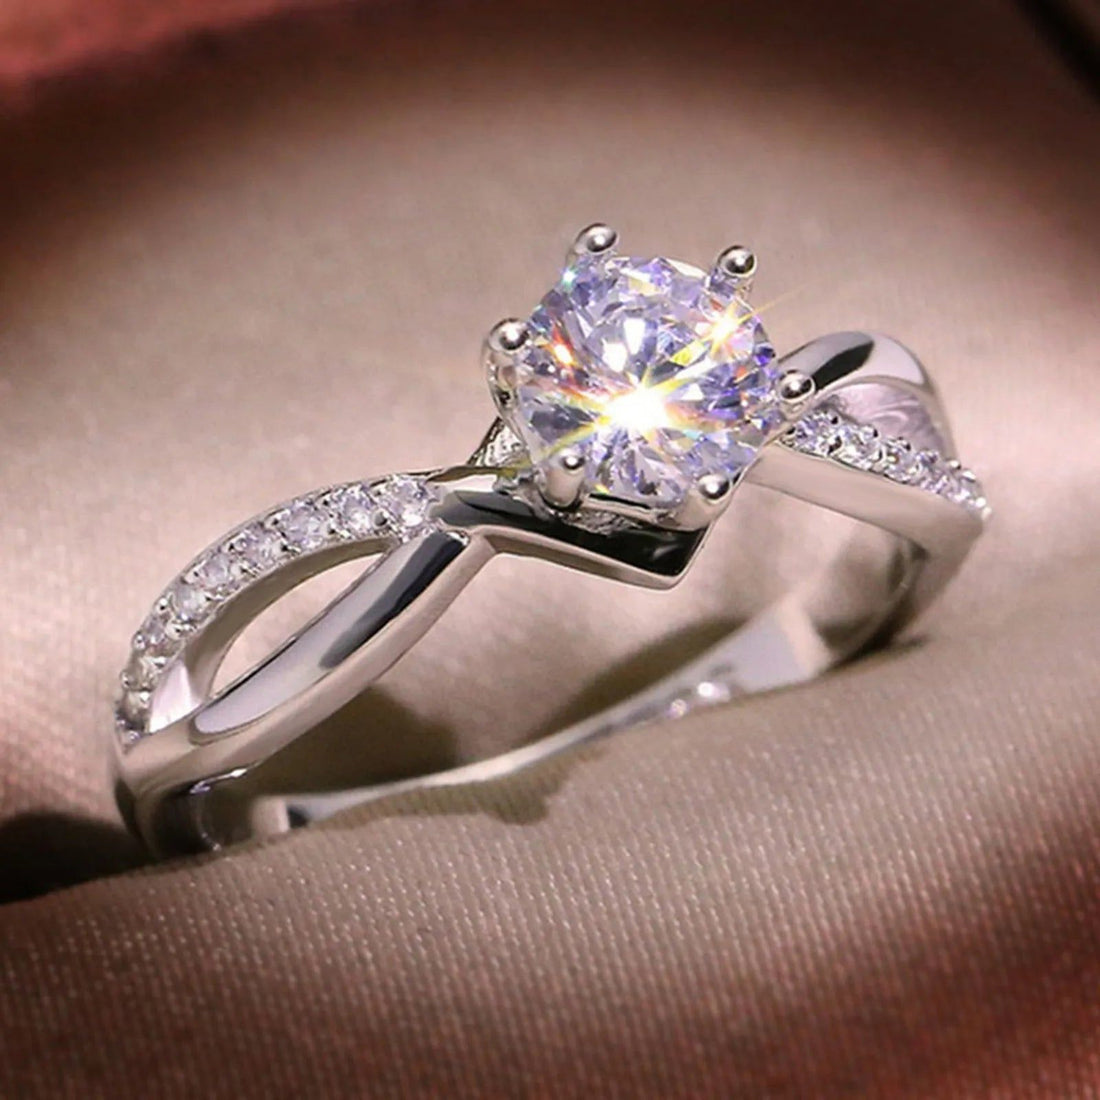 Elegant Zircon Rings For Women White Cz Crystal - Fashionqueene.com